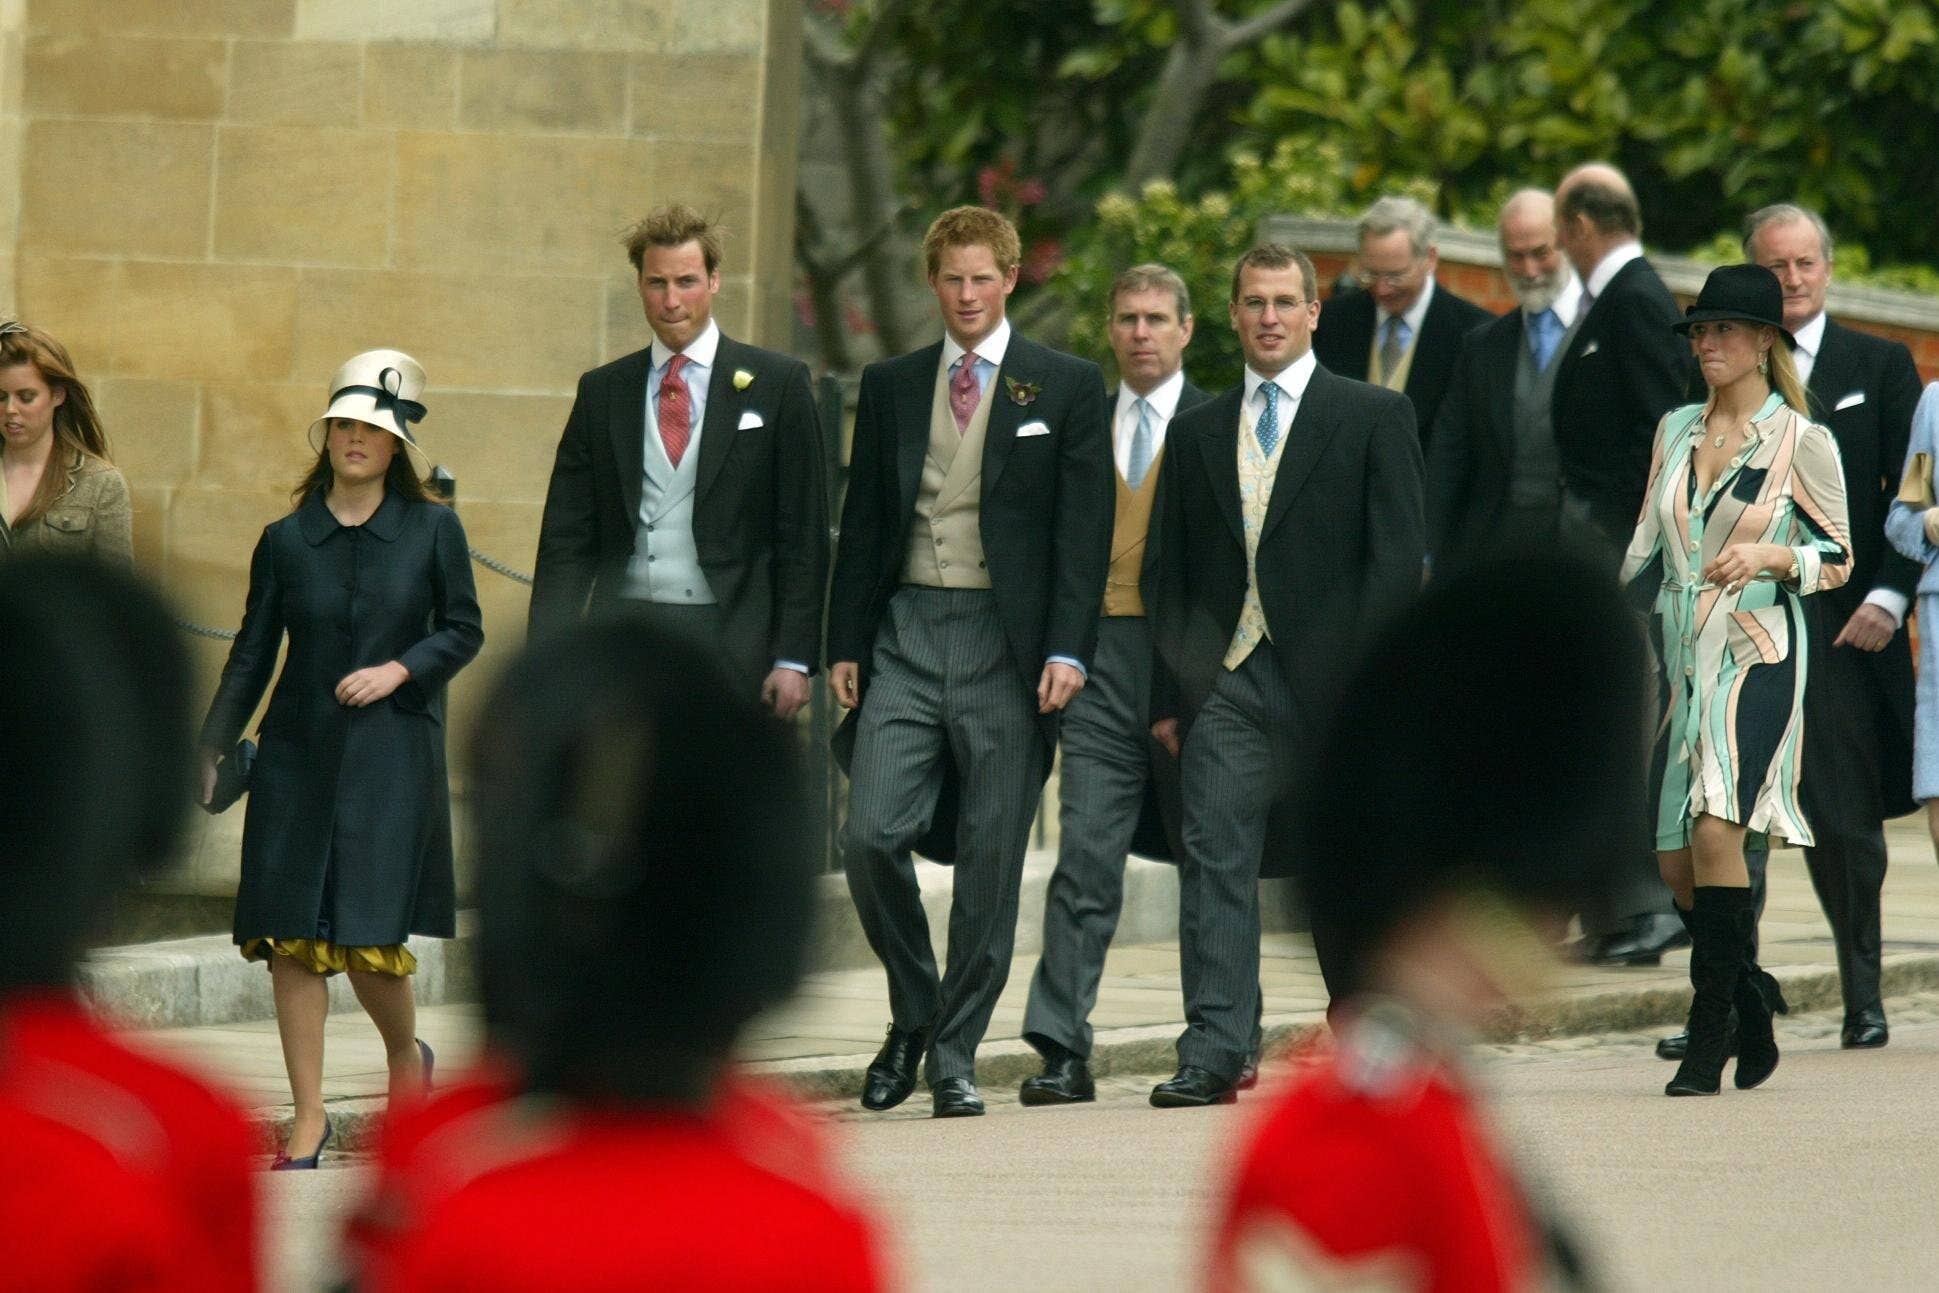 The Duke of Edinburgh's grandchildren | Clacton and Frinton Gazette